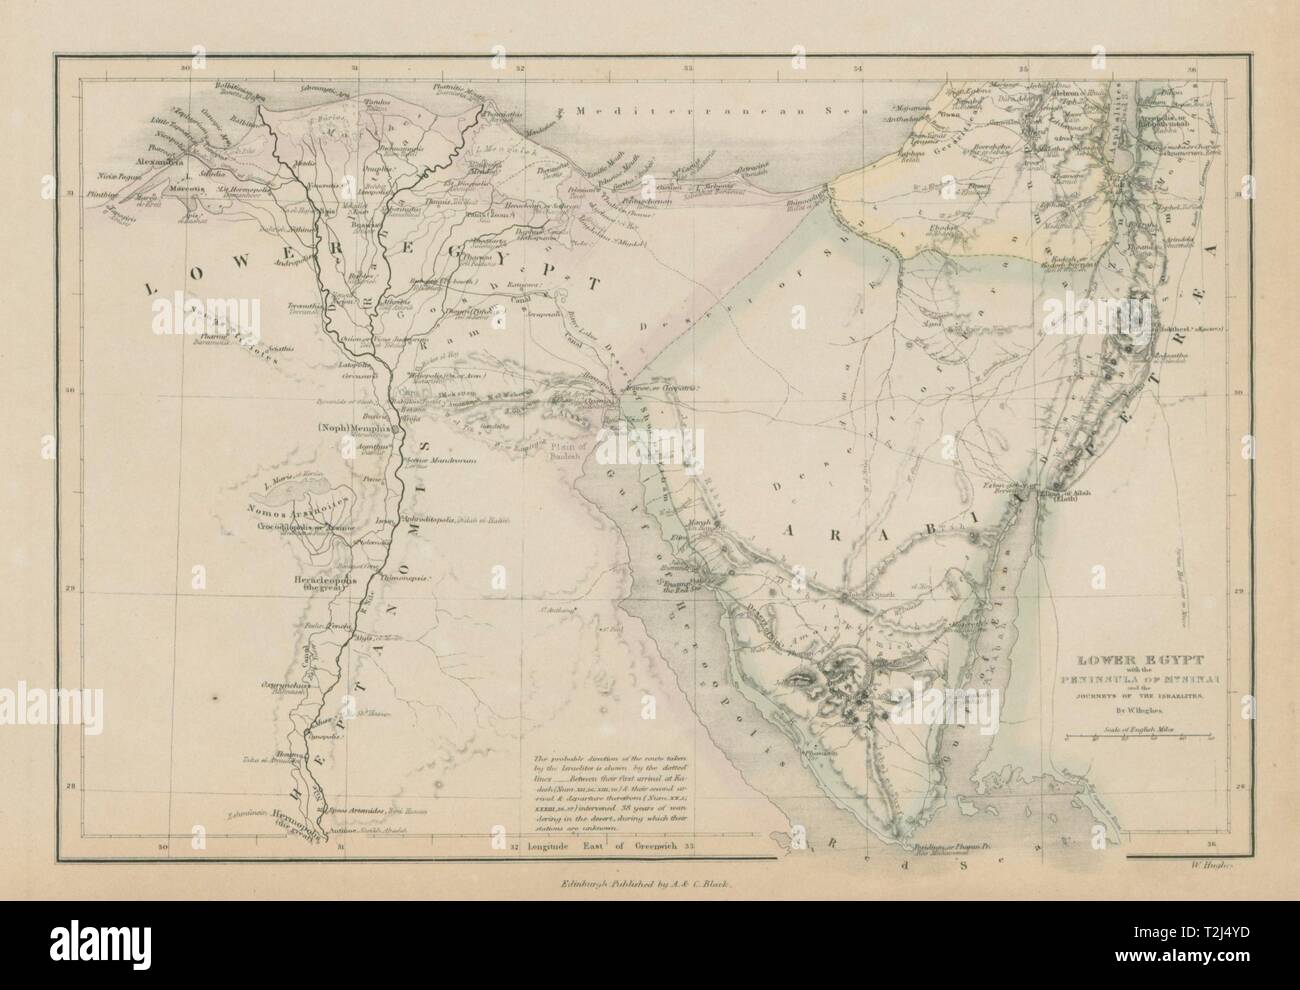 Lower Egypt, Sinai peninsula & Exodus of the Israelites. WILLIAM HUGHES 1856 map Stock Photo